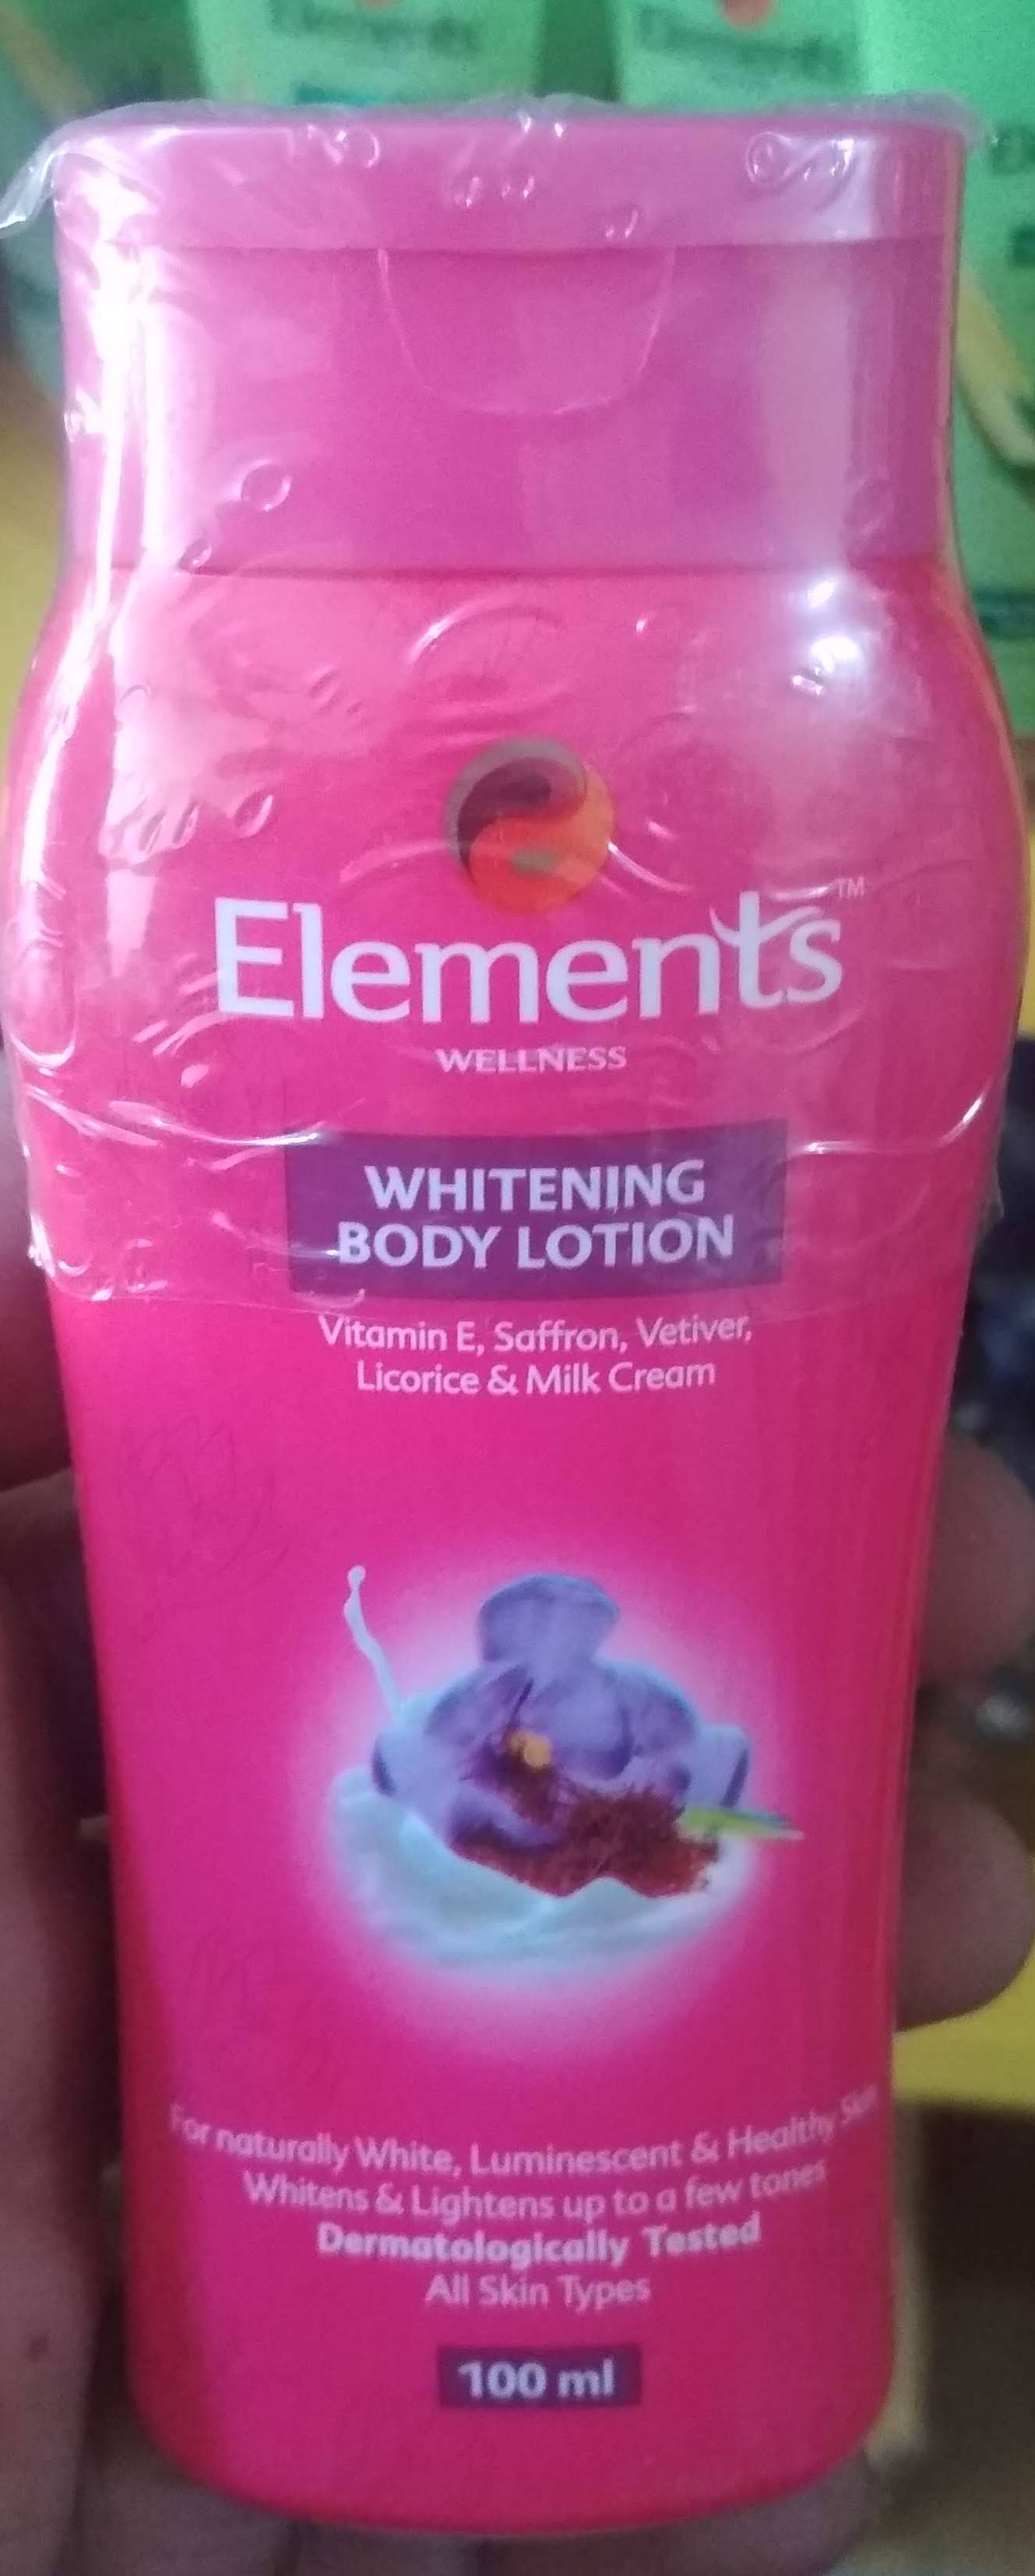 elements wellness whitening body lotion 100ml elements